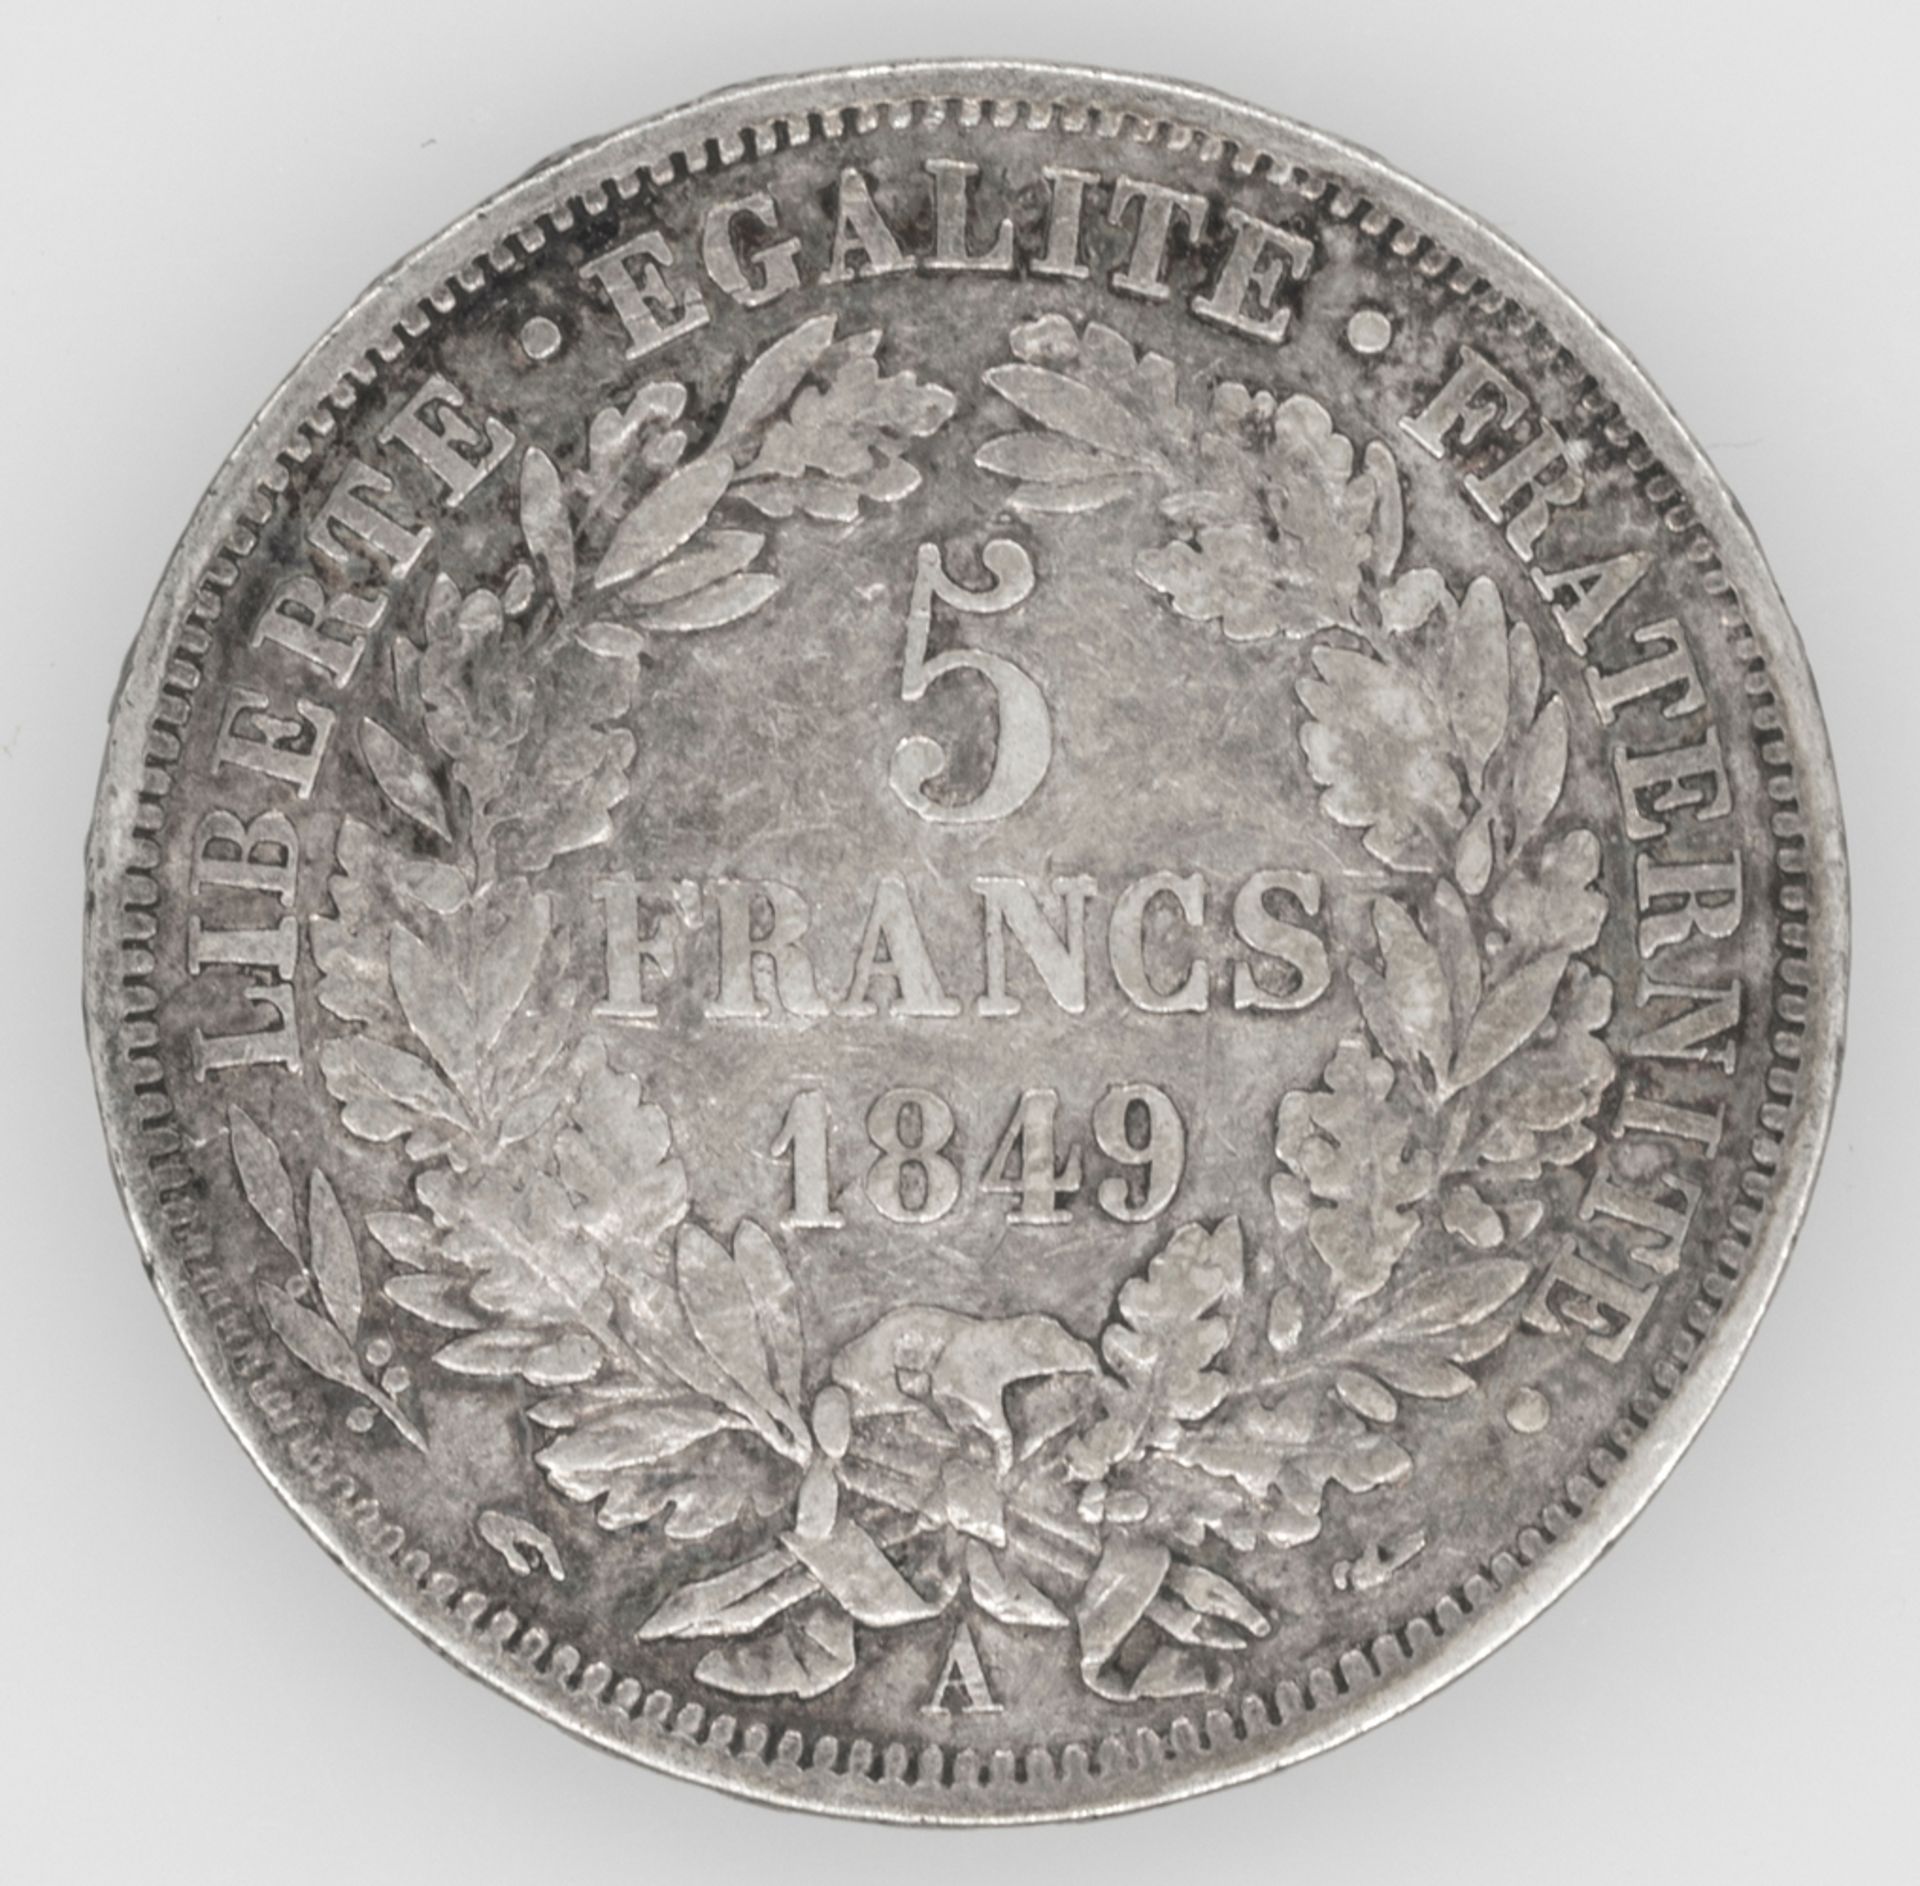 Frankreich 1849 A, 5.- Francs - Silbermünze, Prägeanstalt Paris. Erhaltung: ss.